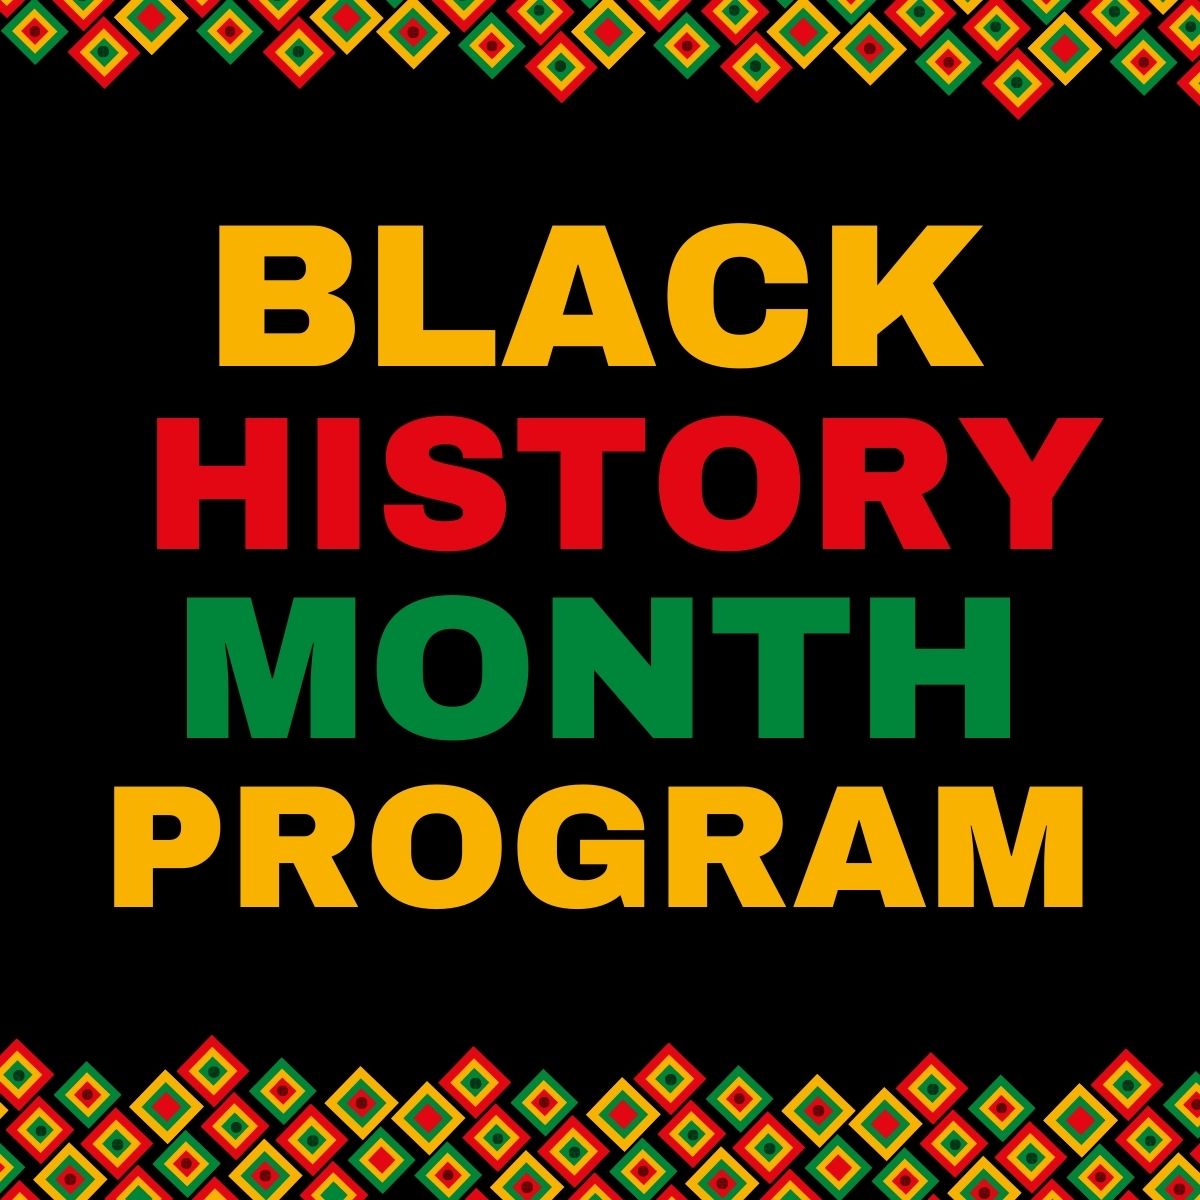 Black History Month Program